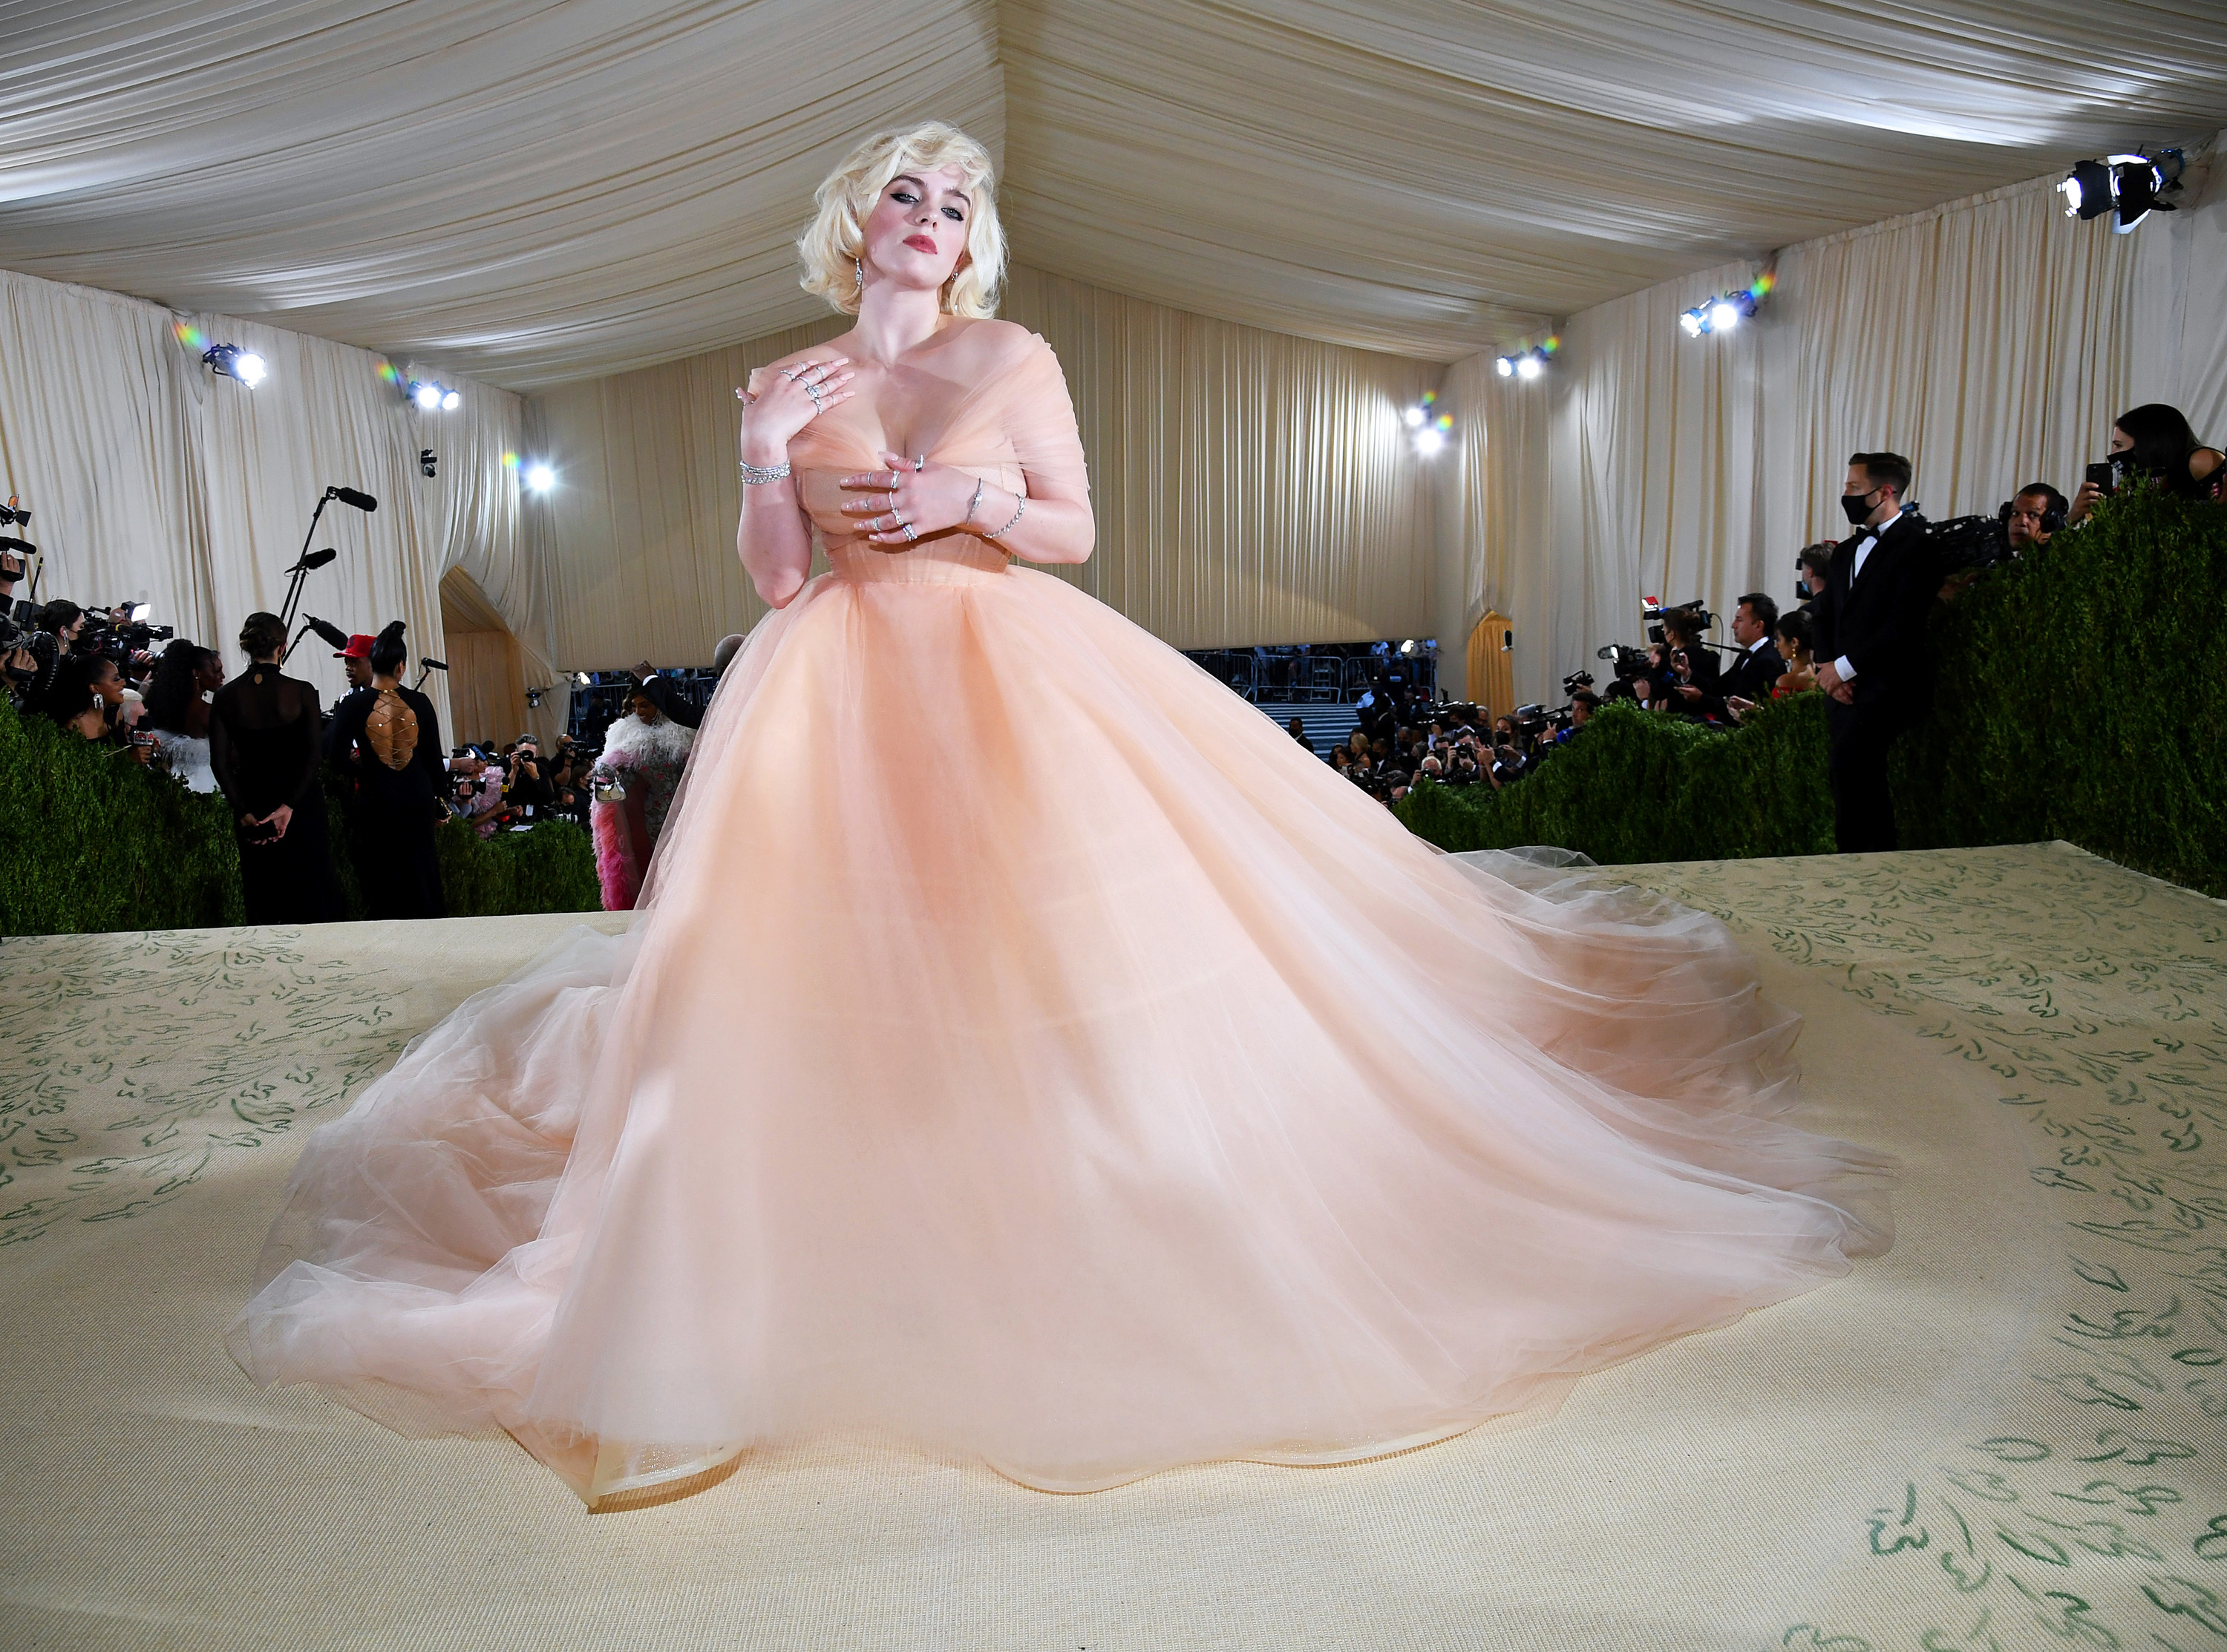 Billie Eilish at the Met Gala in a peach gown